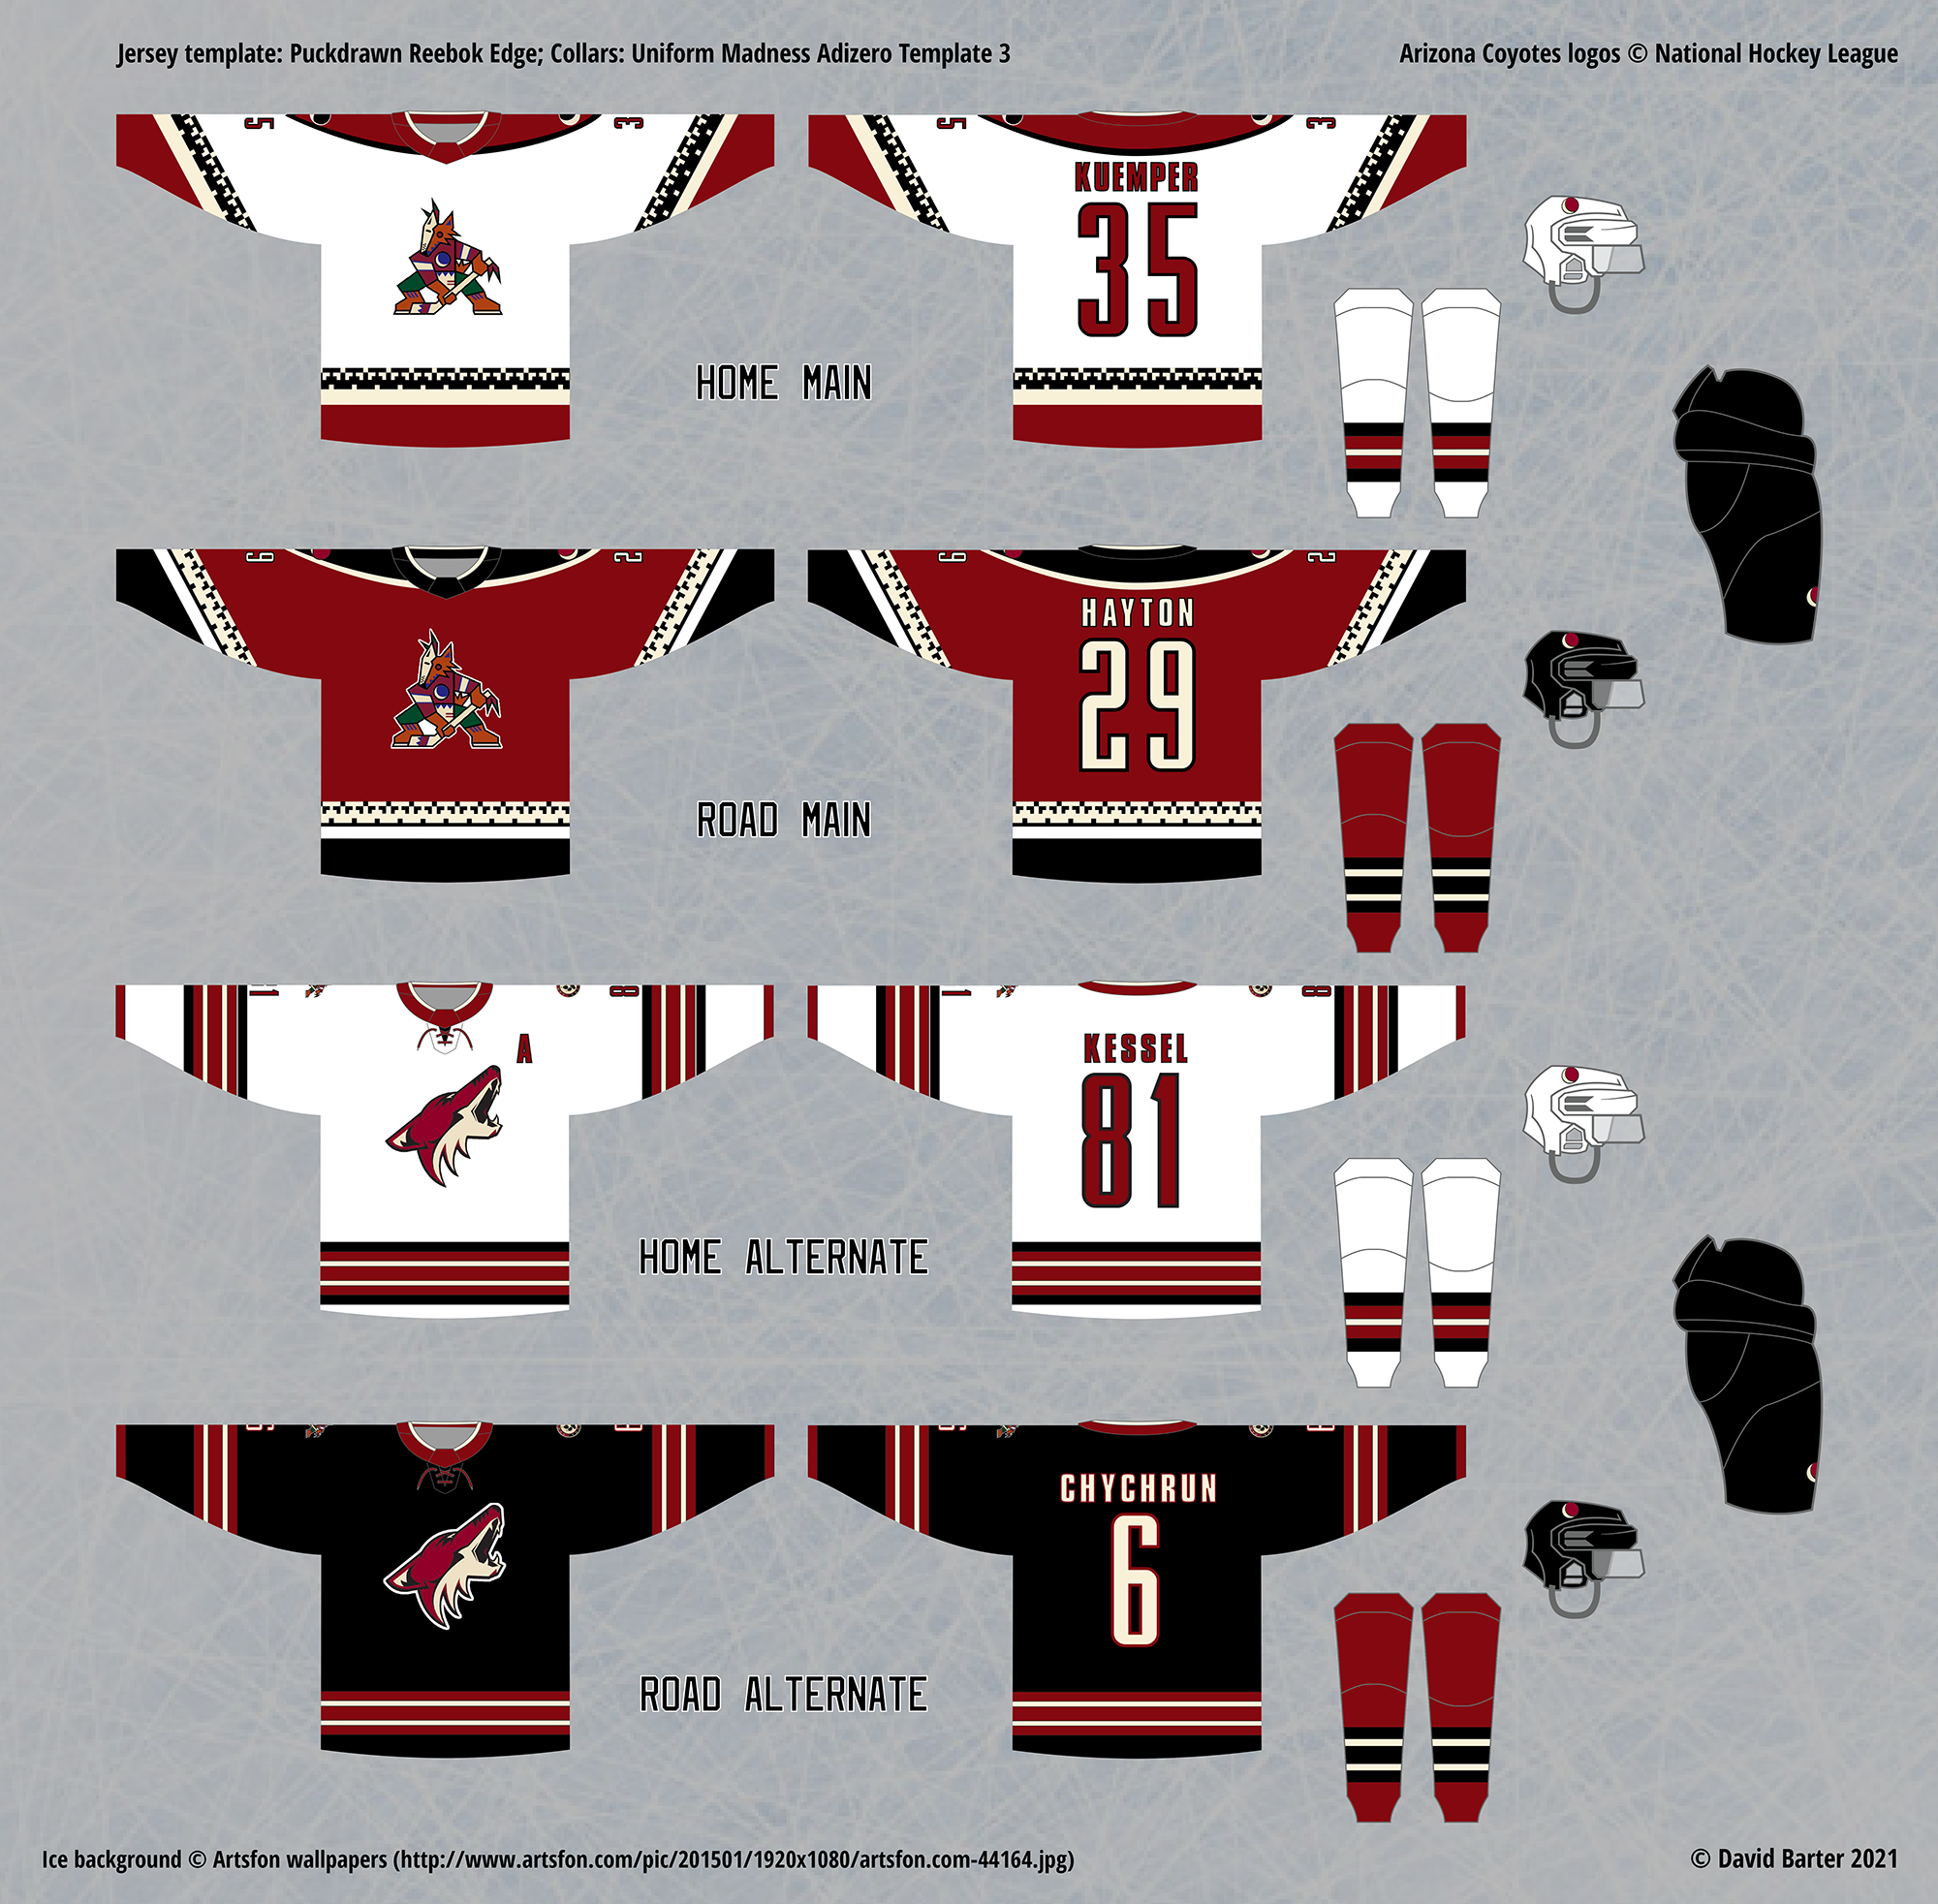 2018 NHL Alternate Uniform Concepts - Arizona Coyotes